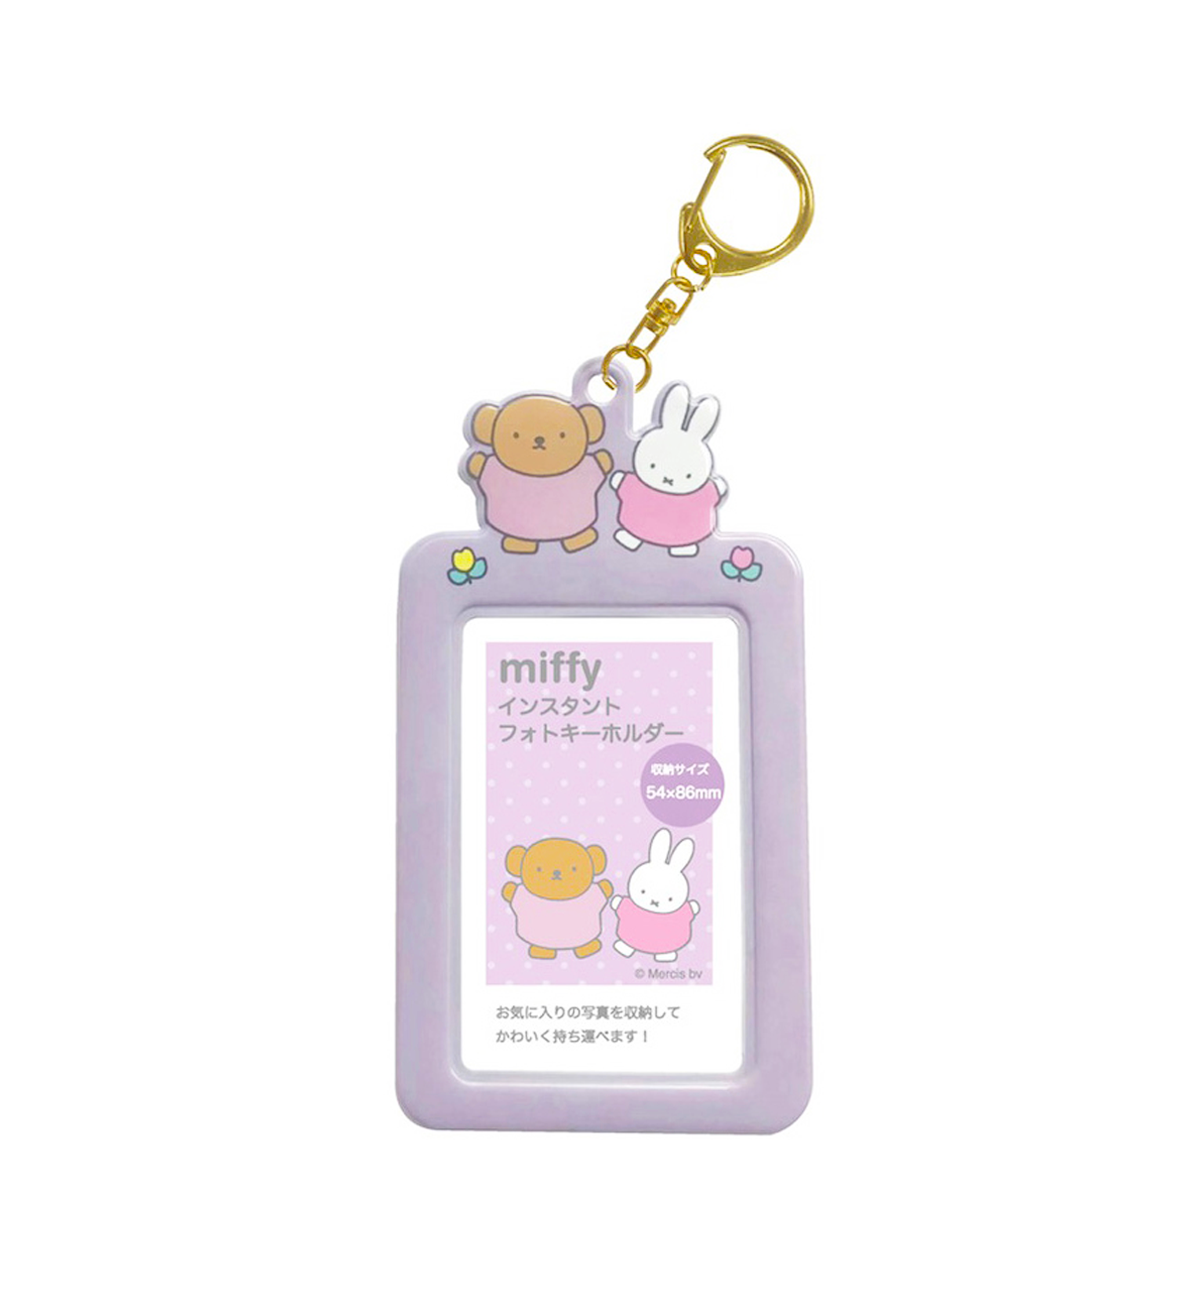 Miffy & Friends Photocard Holder [Purple]